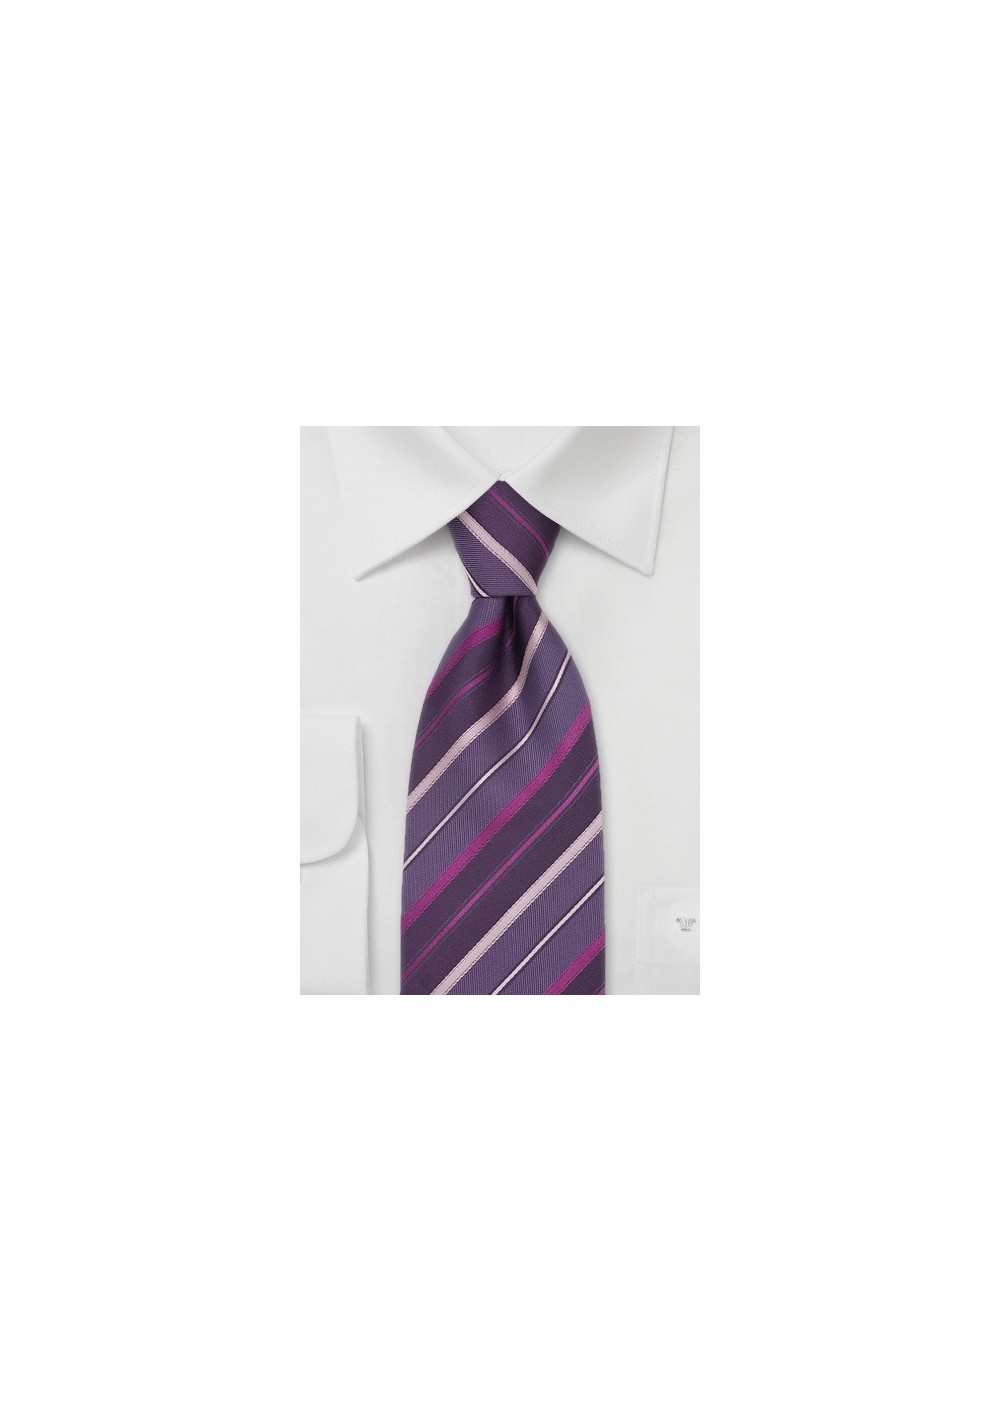 Striped Silk Tie in Lavender, Pink, Purple